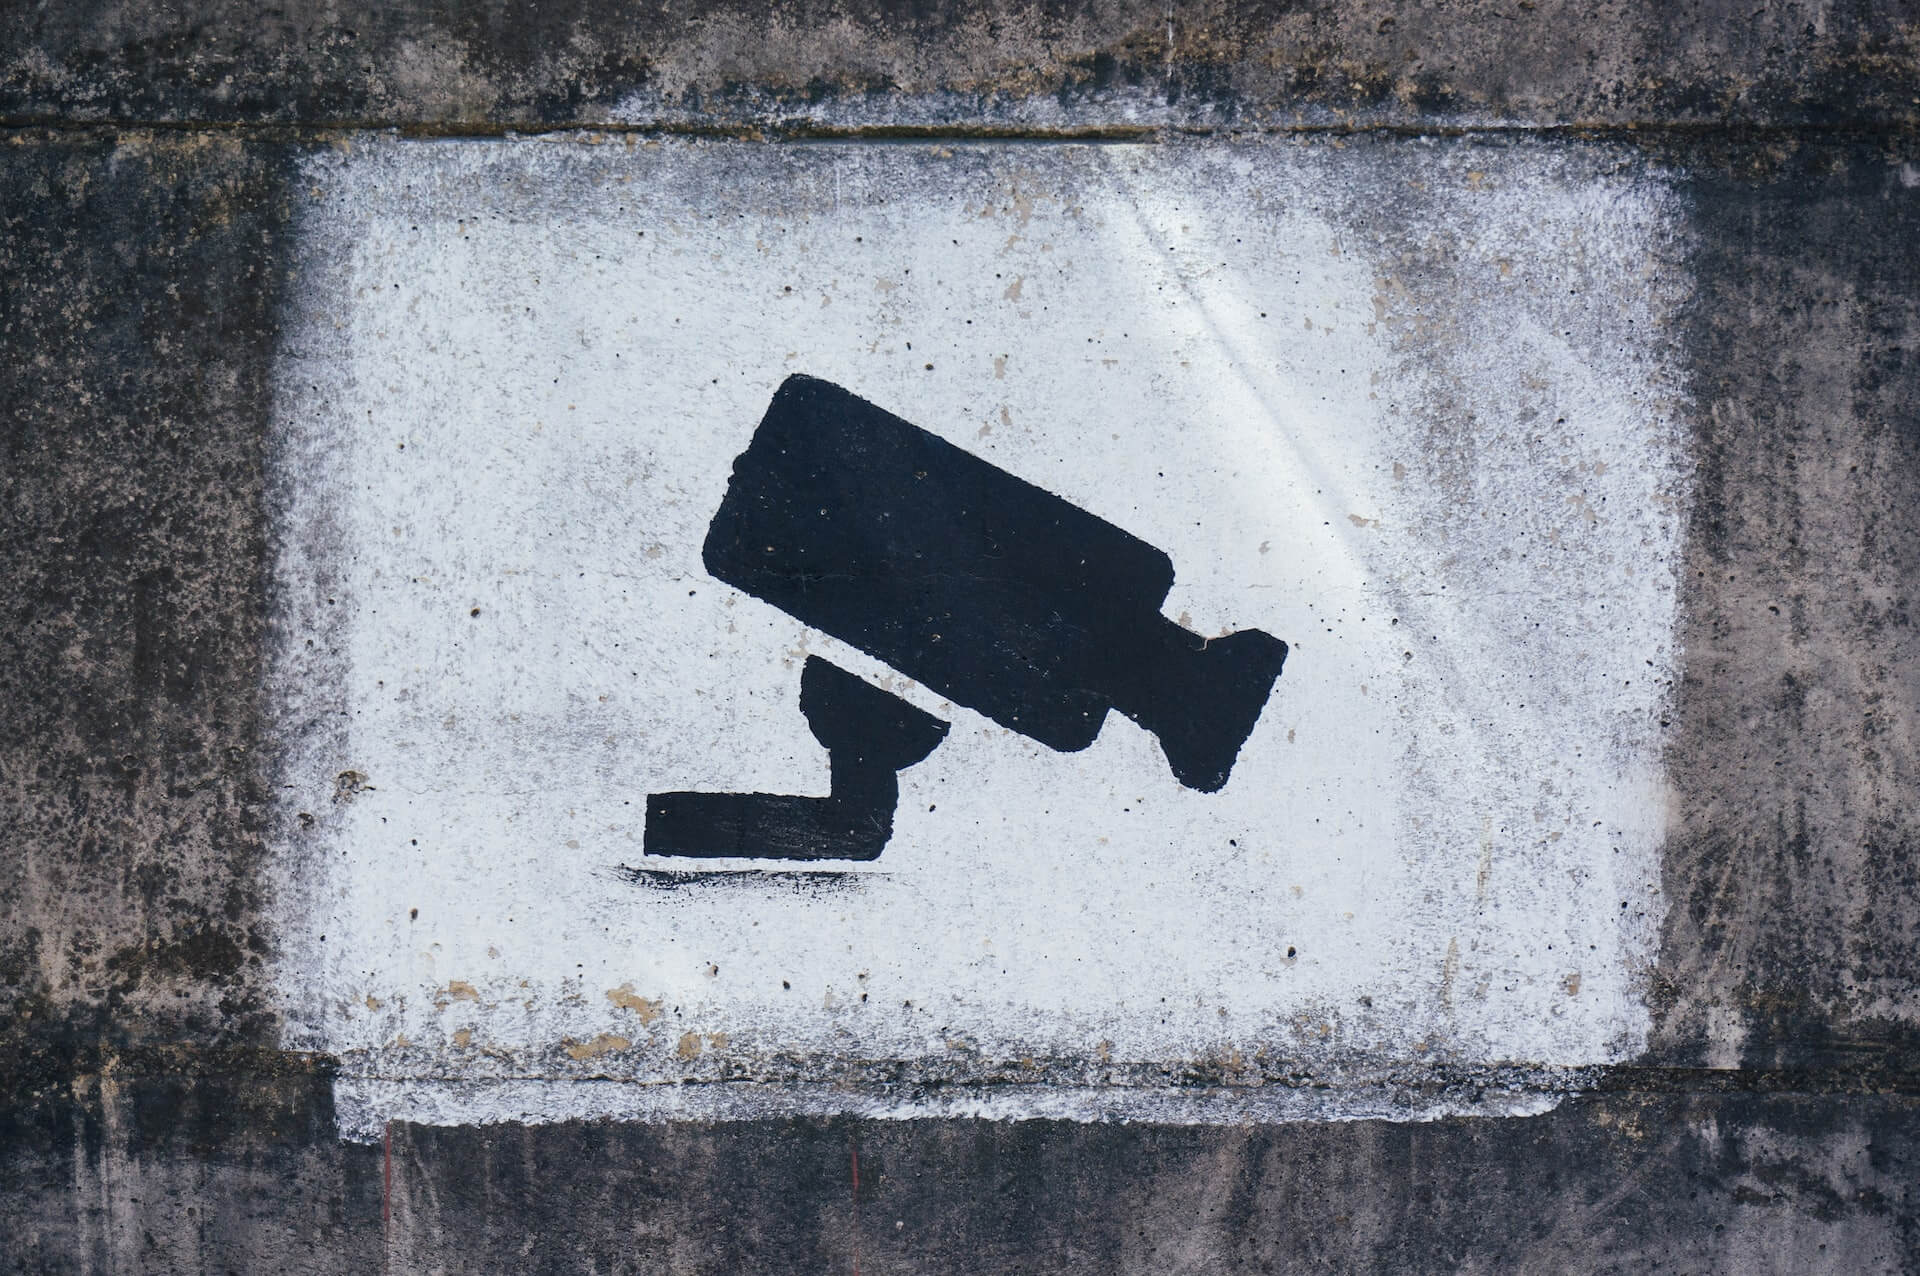 Security camera stencil graffiti design